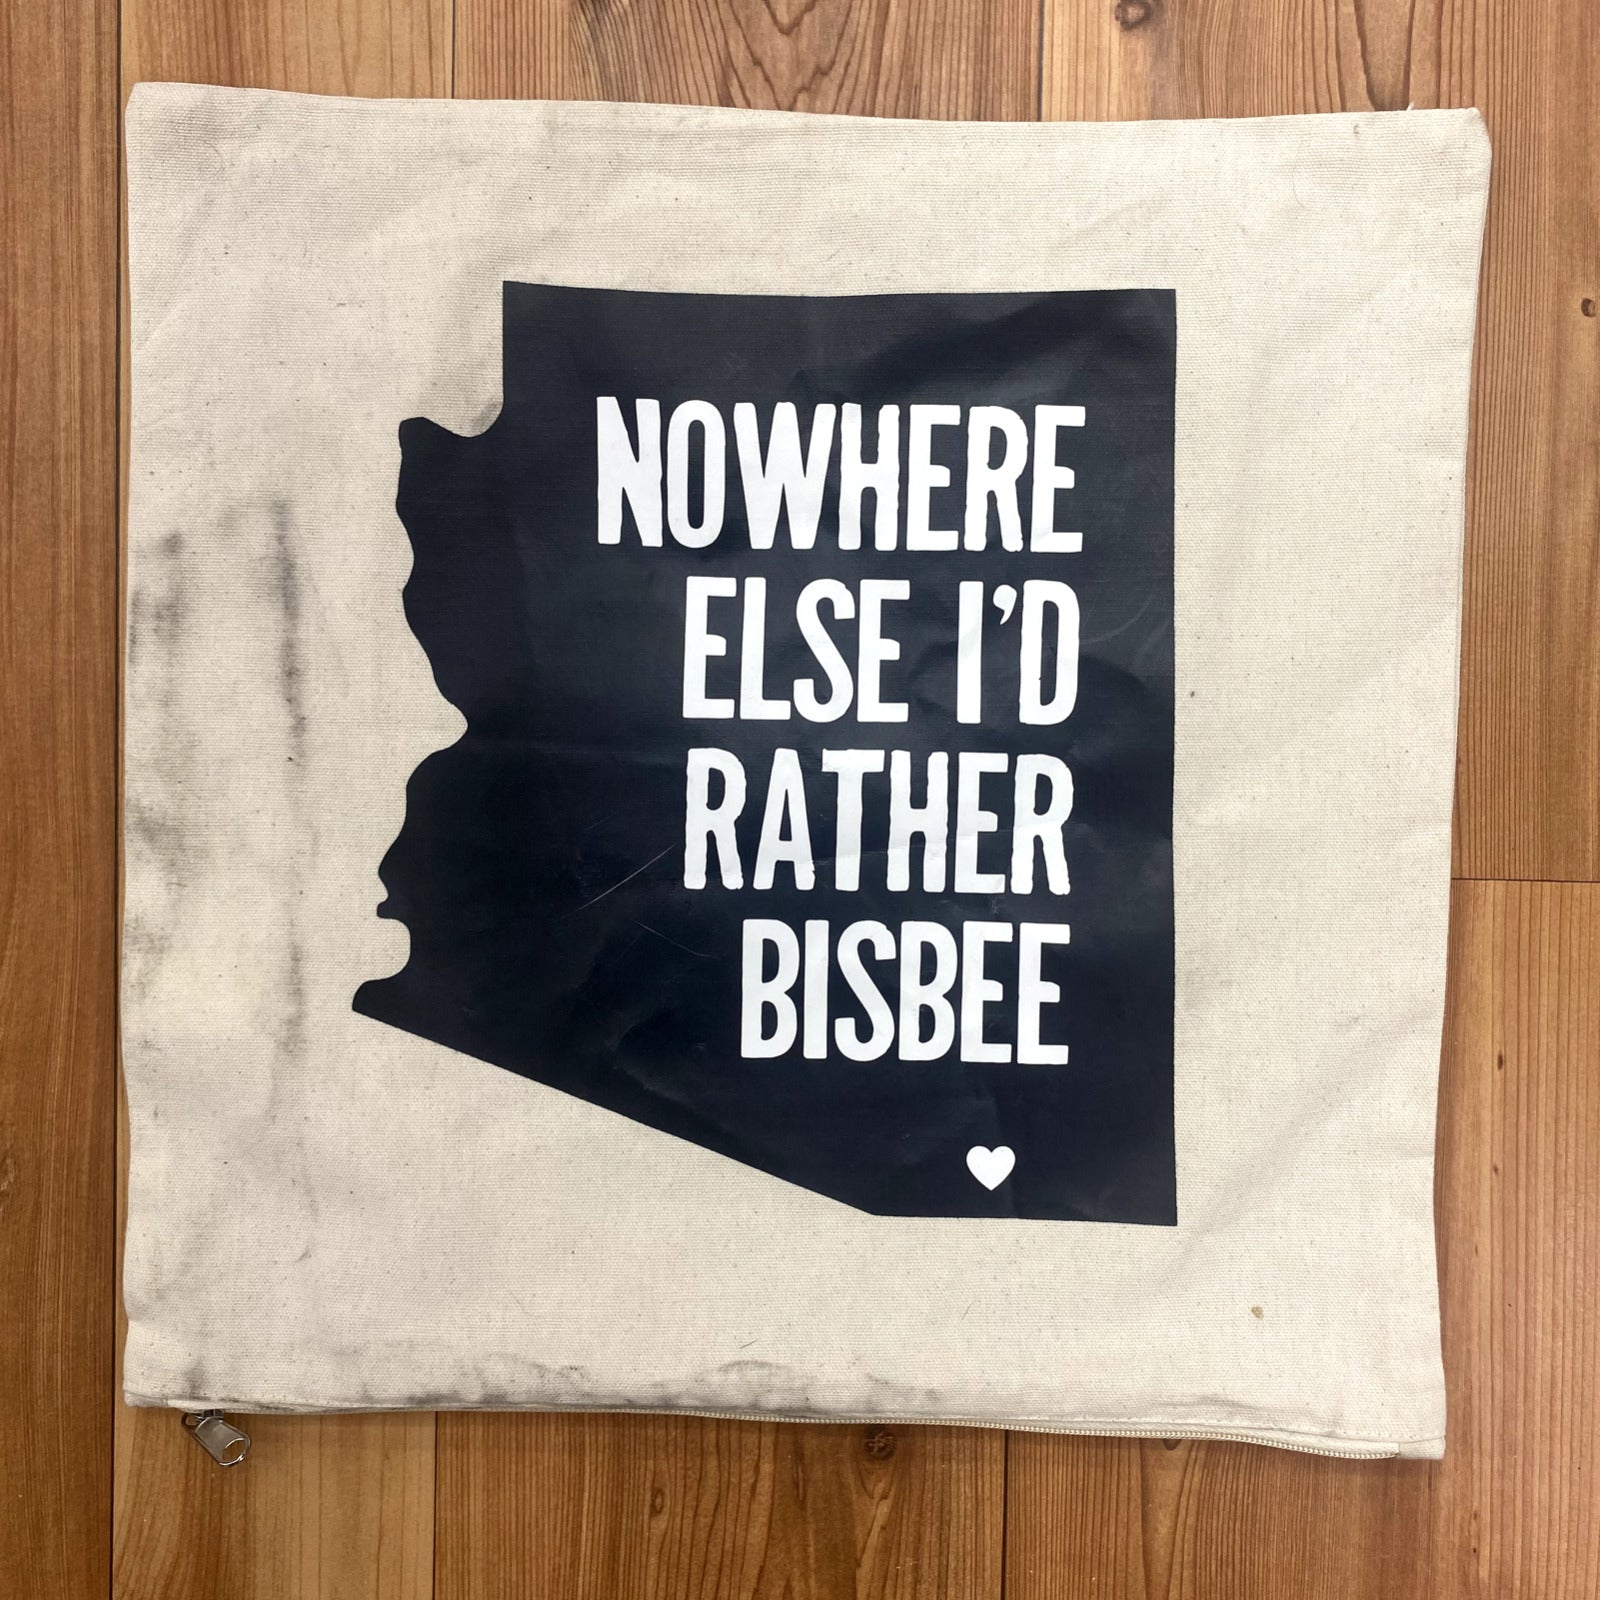 Hit Promotions Beige Arizona Nowhere Else I'd Rather Bisbee Canvas Bag